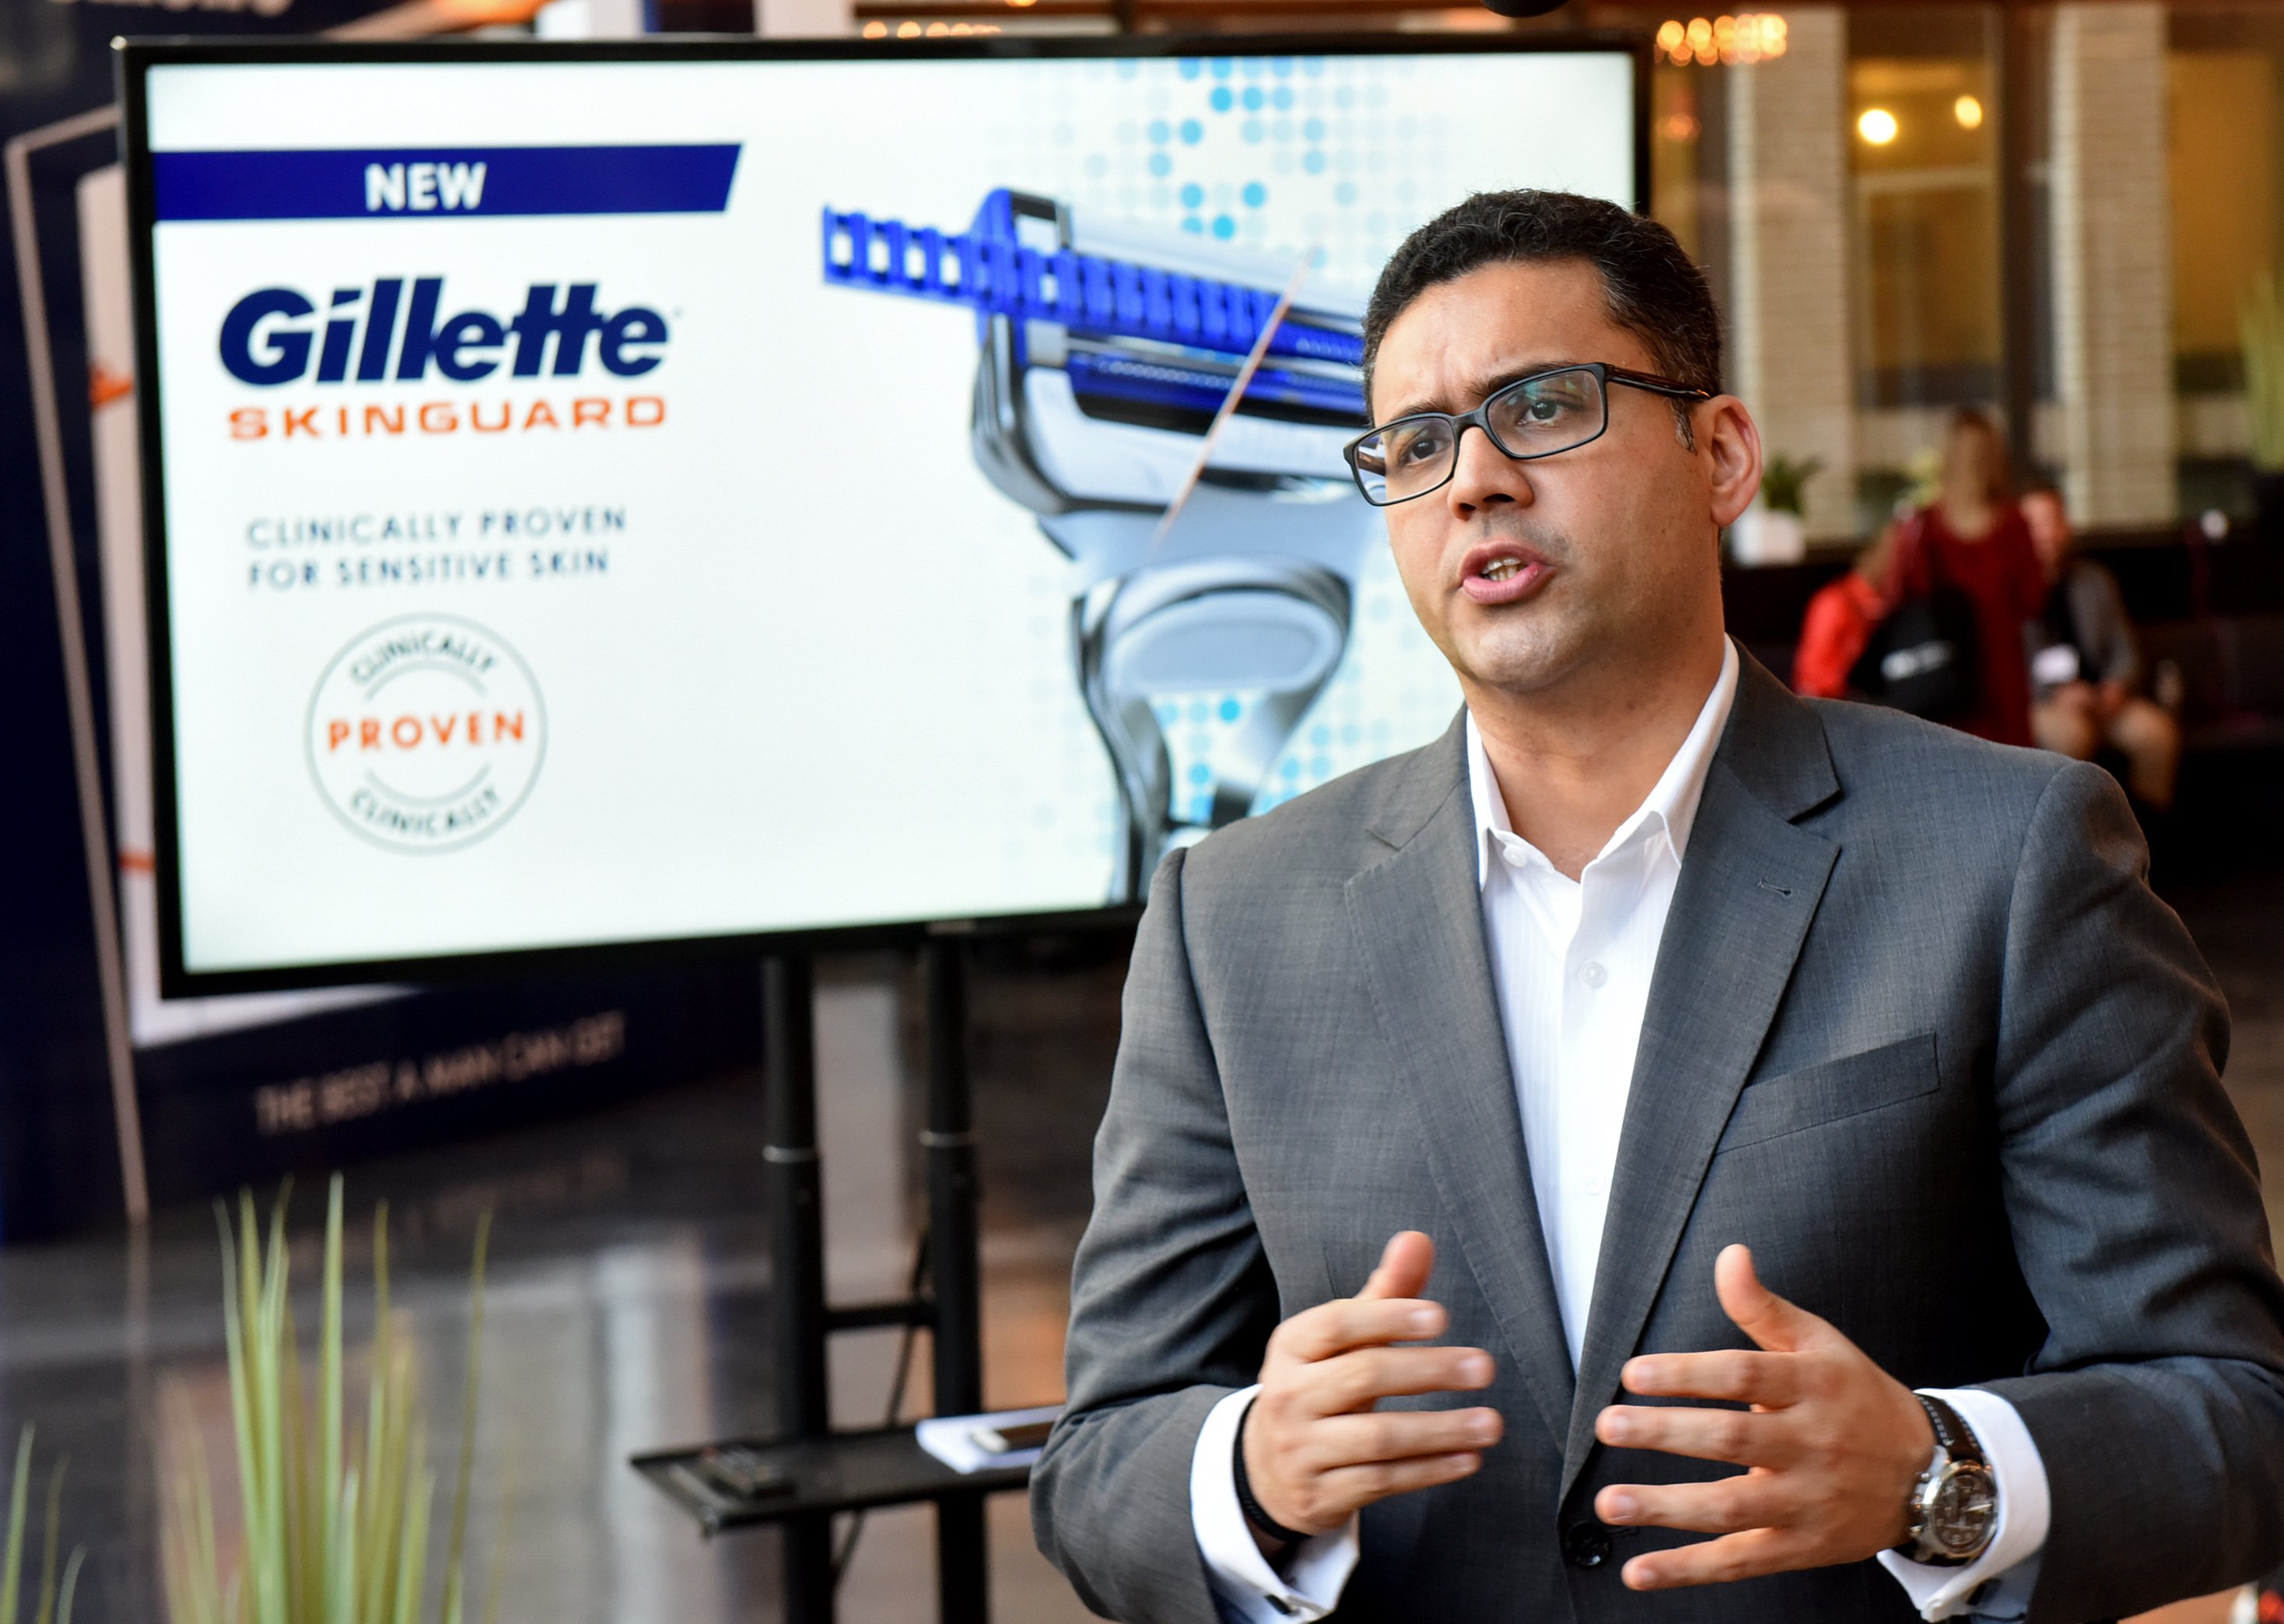 Pankaj Bhalla, Brand Director van Gillette North America, presenteert de Sinkguard op Gillette's Global Innovation Summit in New York. Foto Diane Bondareff / Gillette